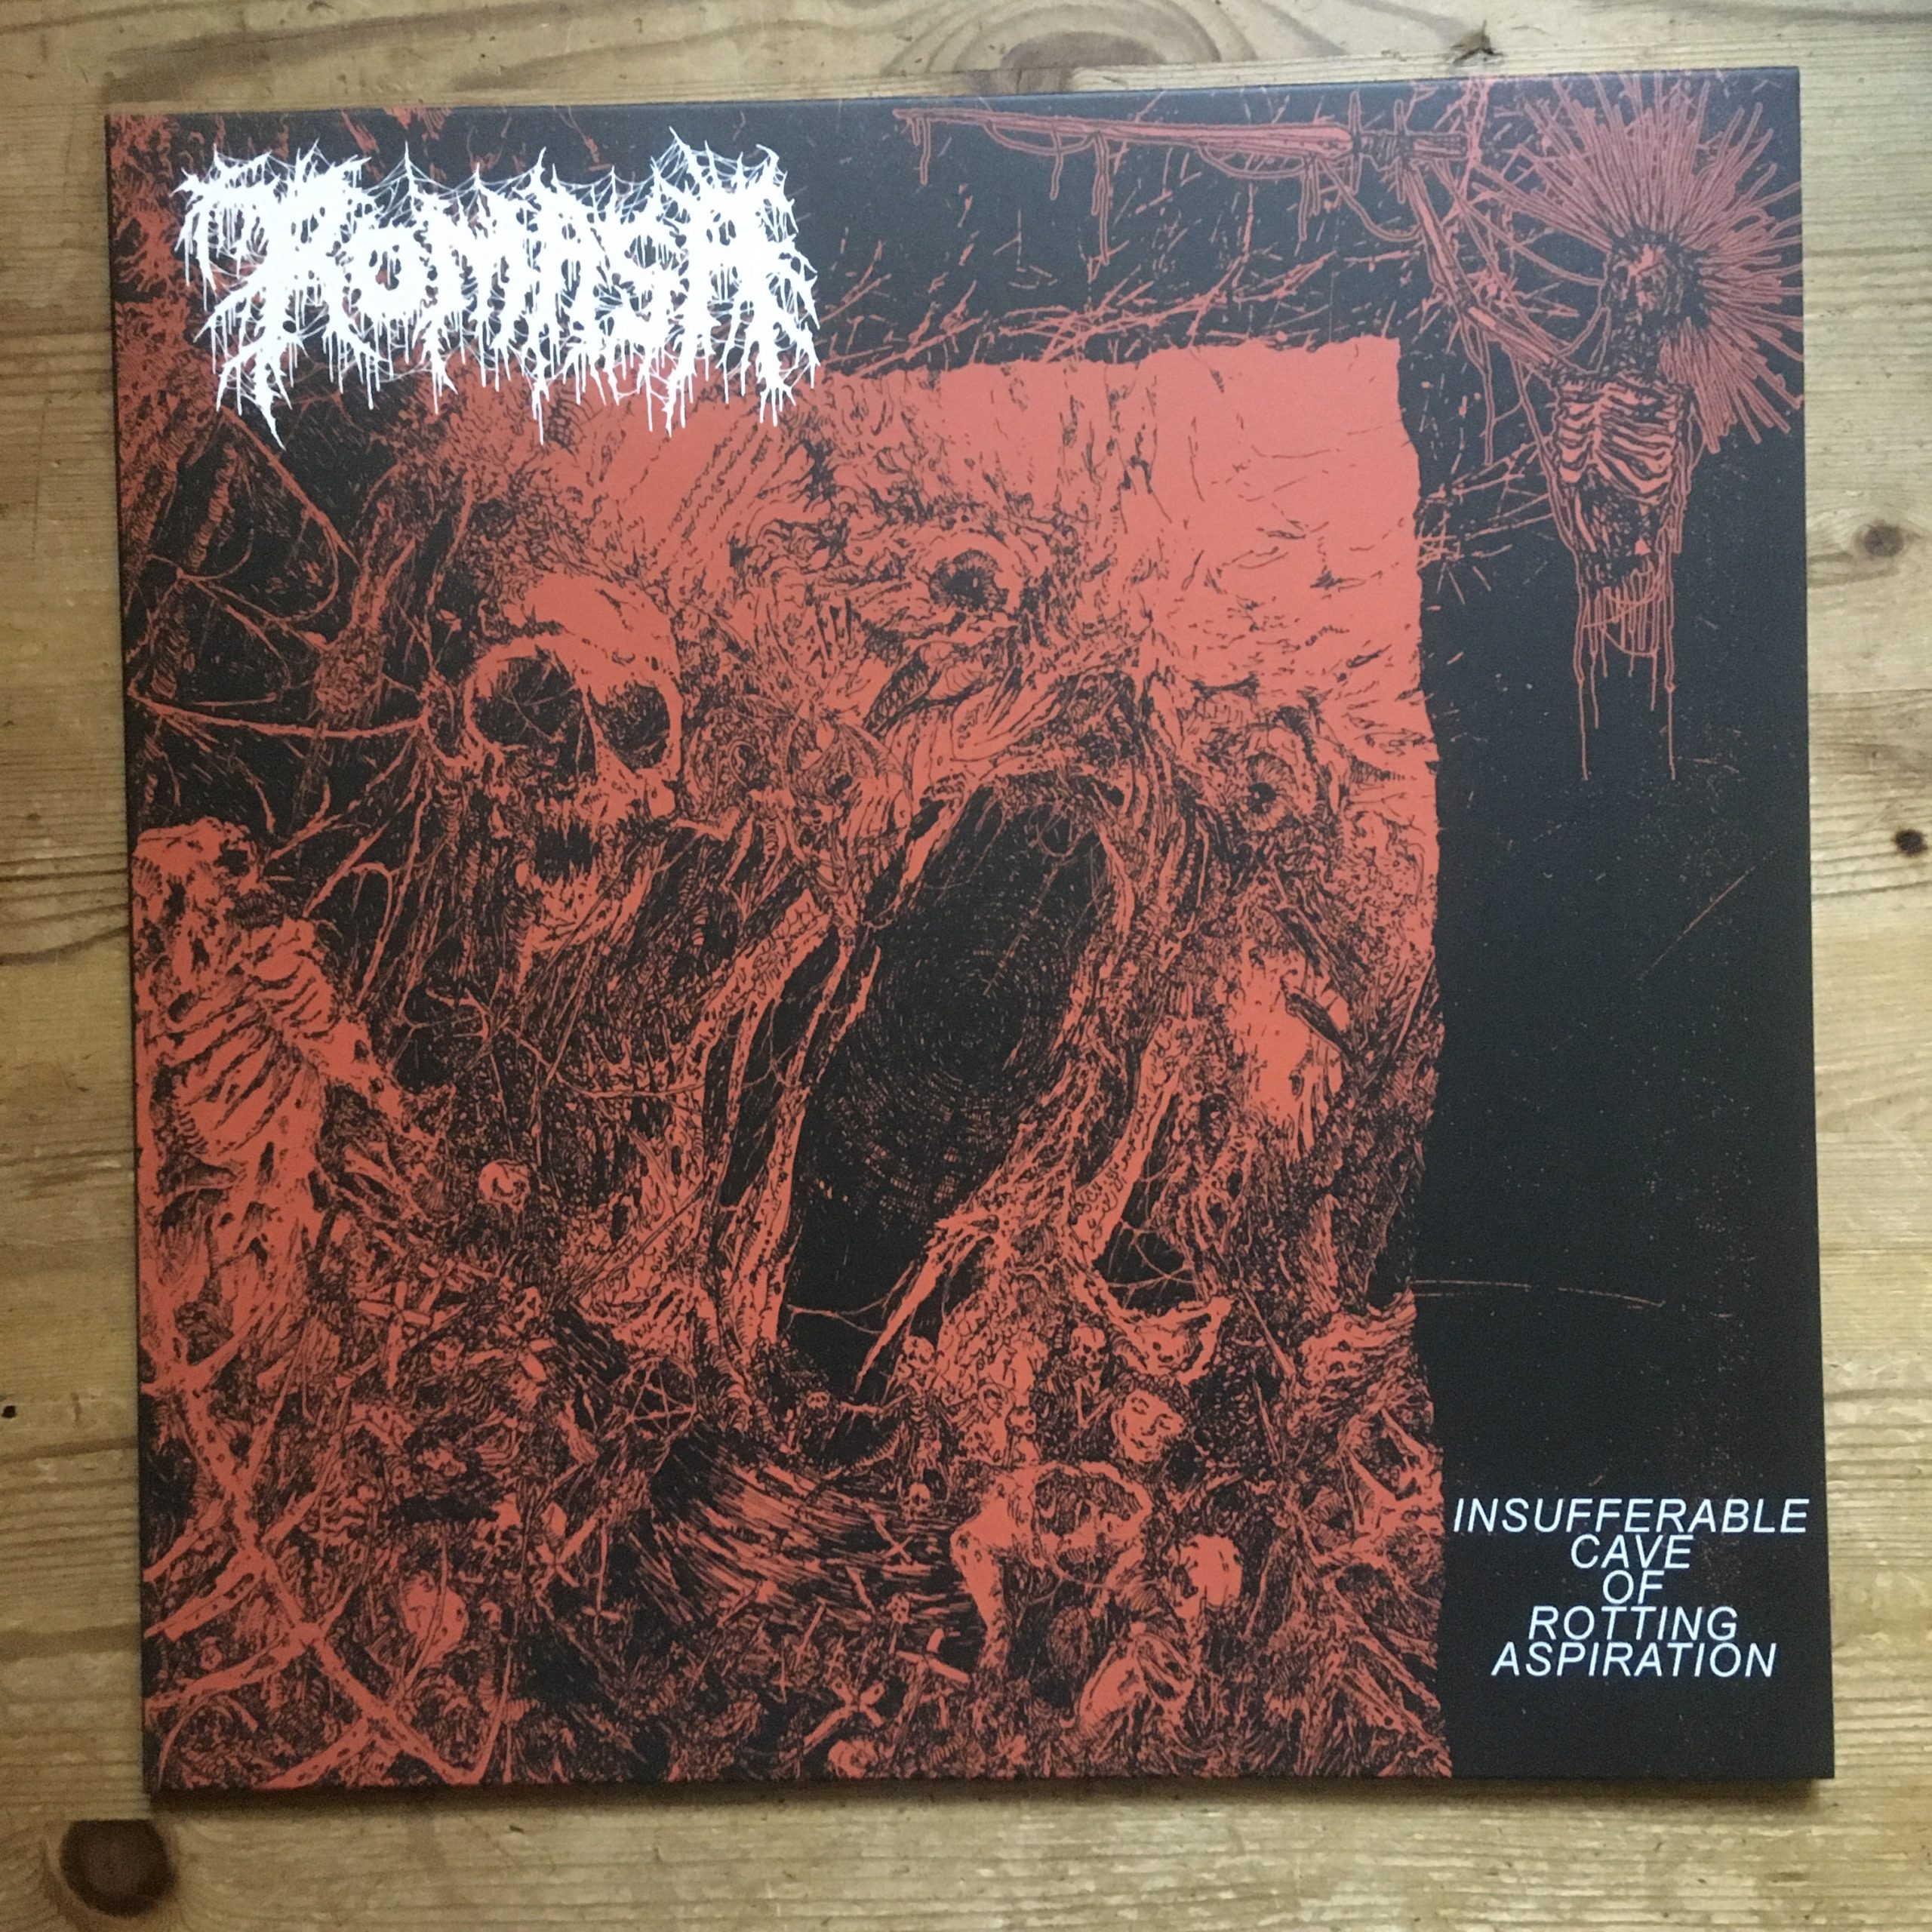 Photo of the Romasa - "Insuferrable Cave Of Rotting Aspiration" LP (Black vinyl)